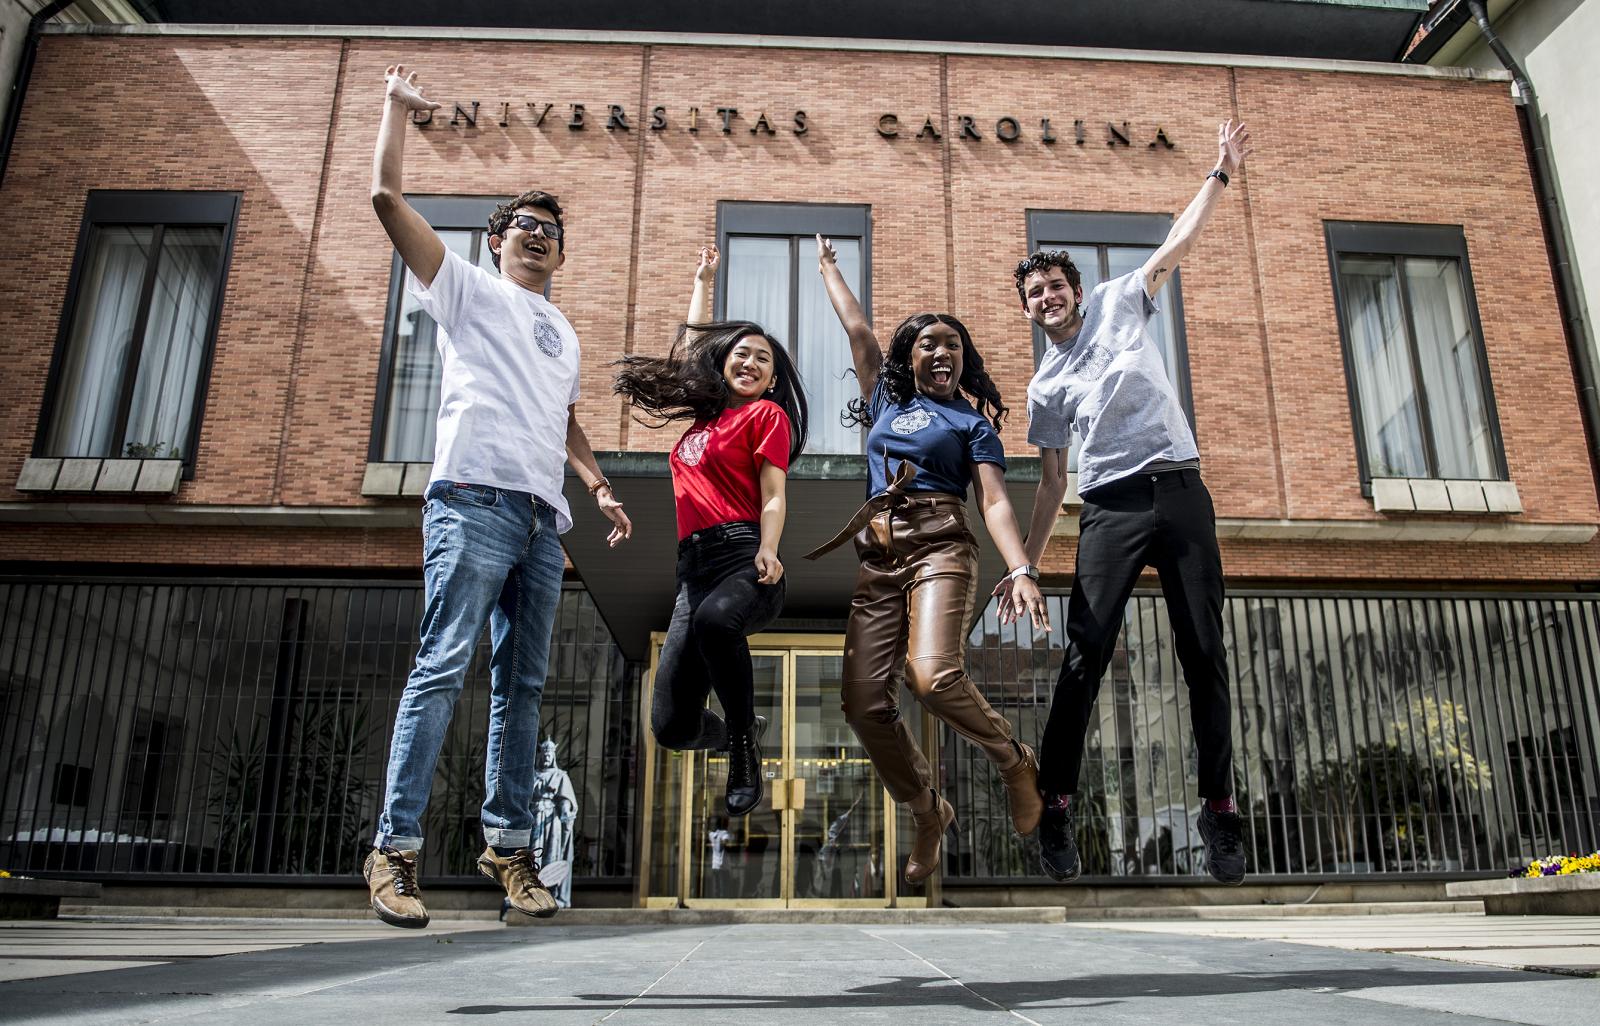 charles university jumping students